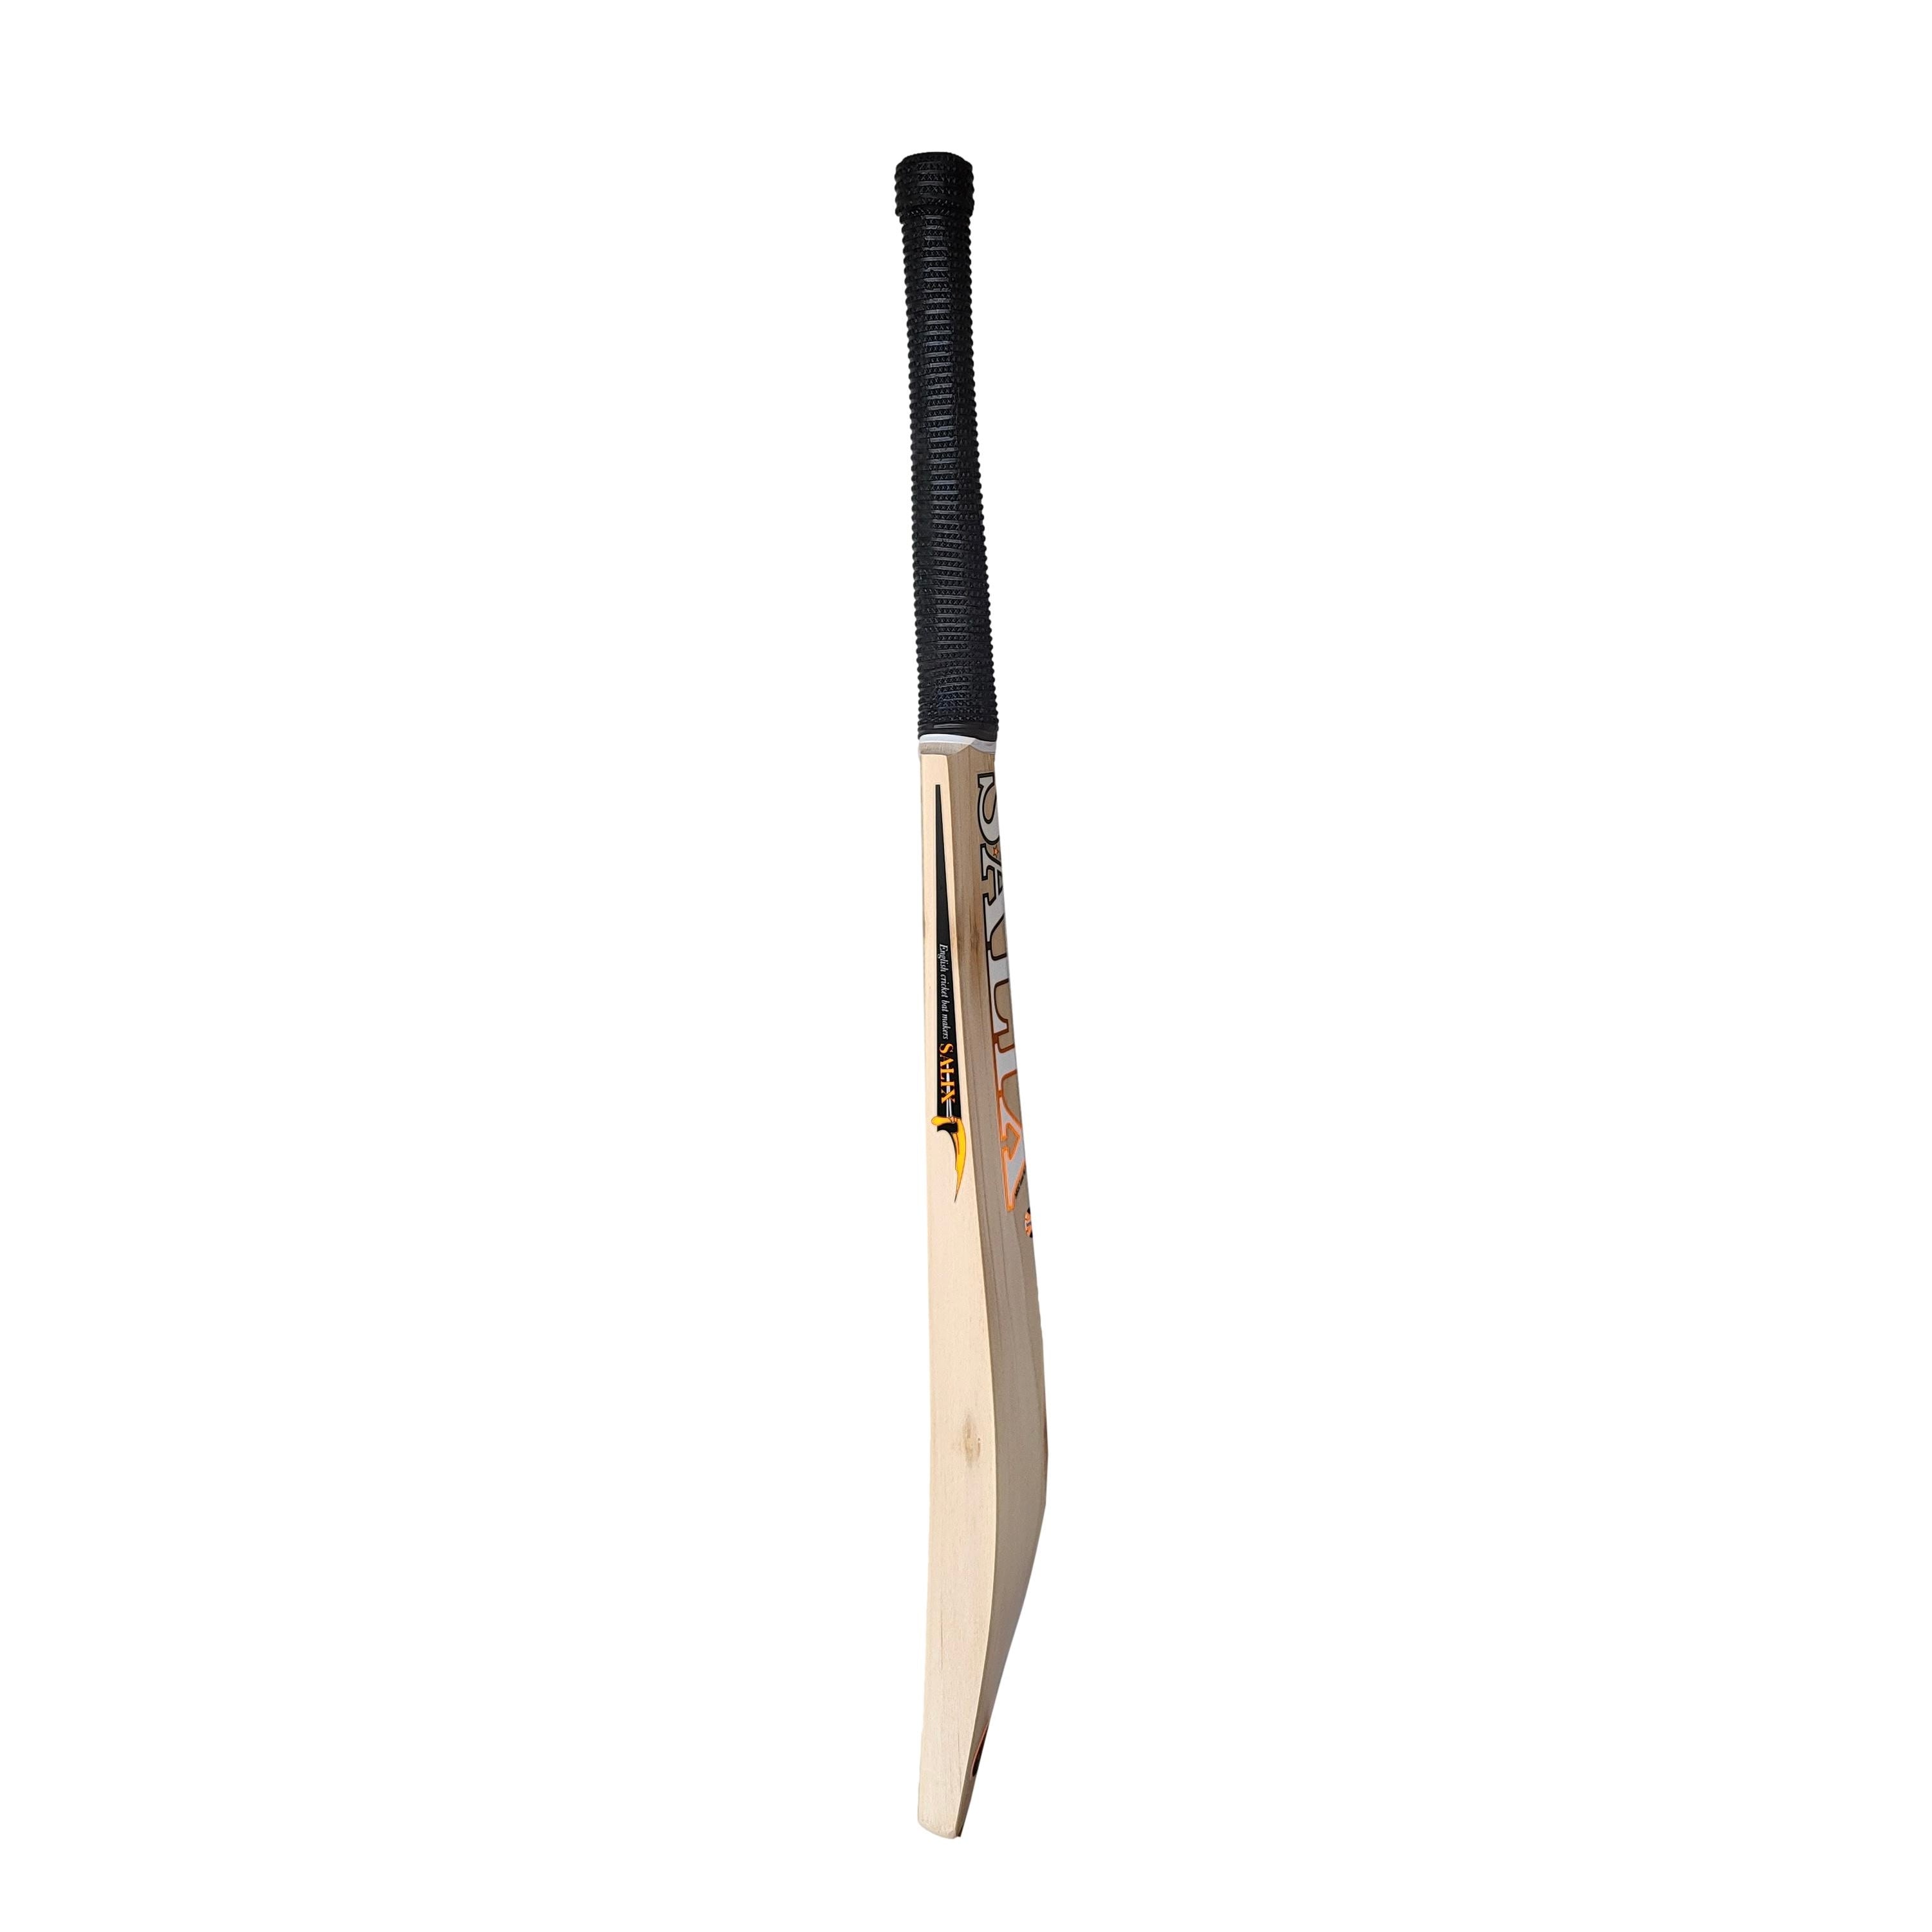 Salix AMP Select Cricket Bat - The Cricket Store